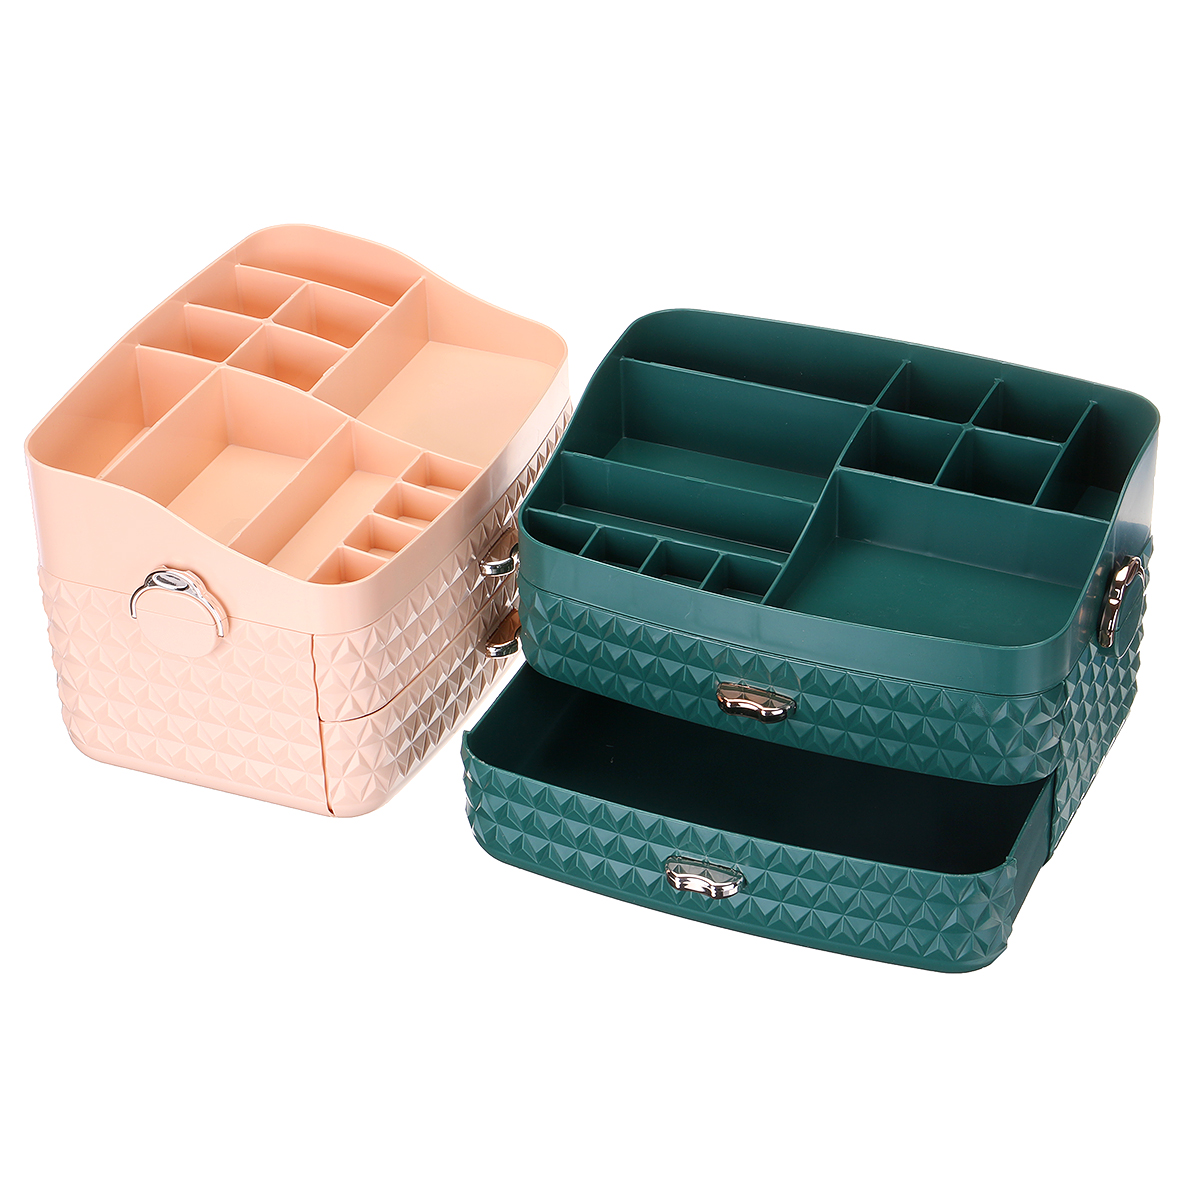 Dustproof-Cosmetic-Storage-Box-with-Drawer-Large-Capacity-Desktop-Furnishings-Organizer-Home-Desk-Su-1777438-14